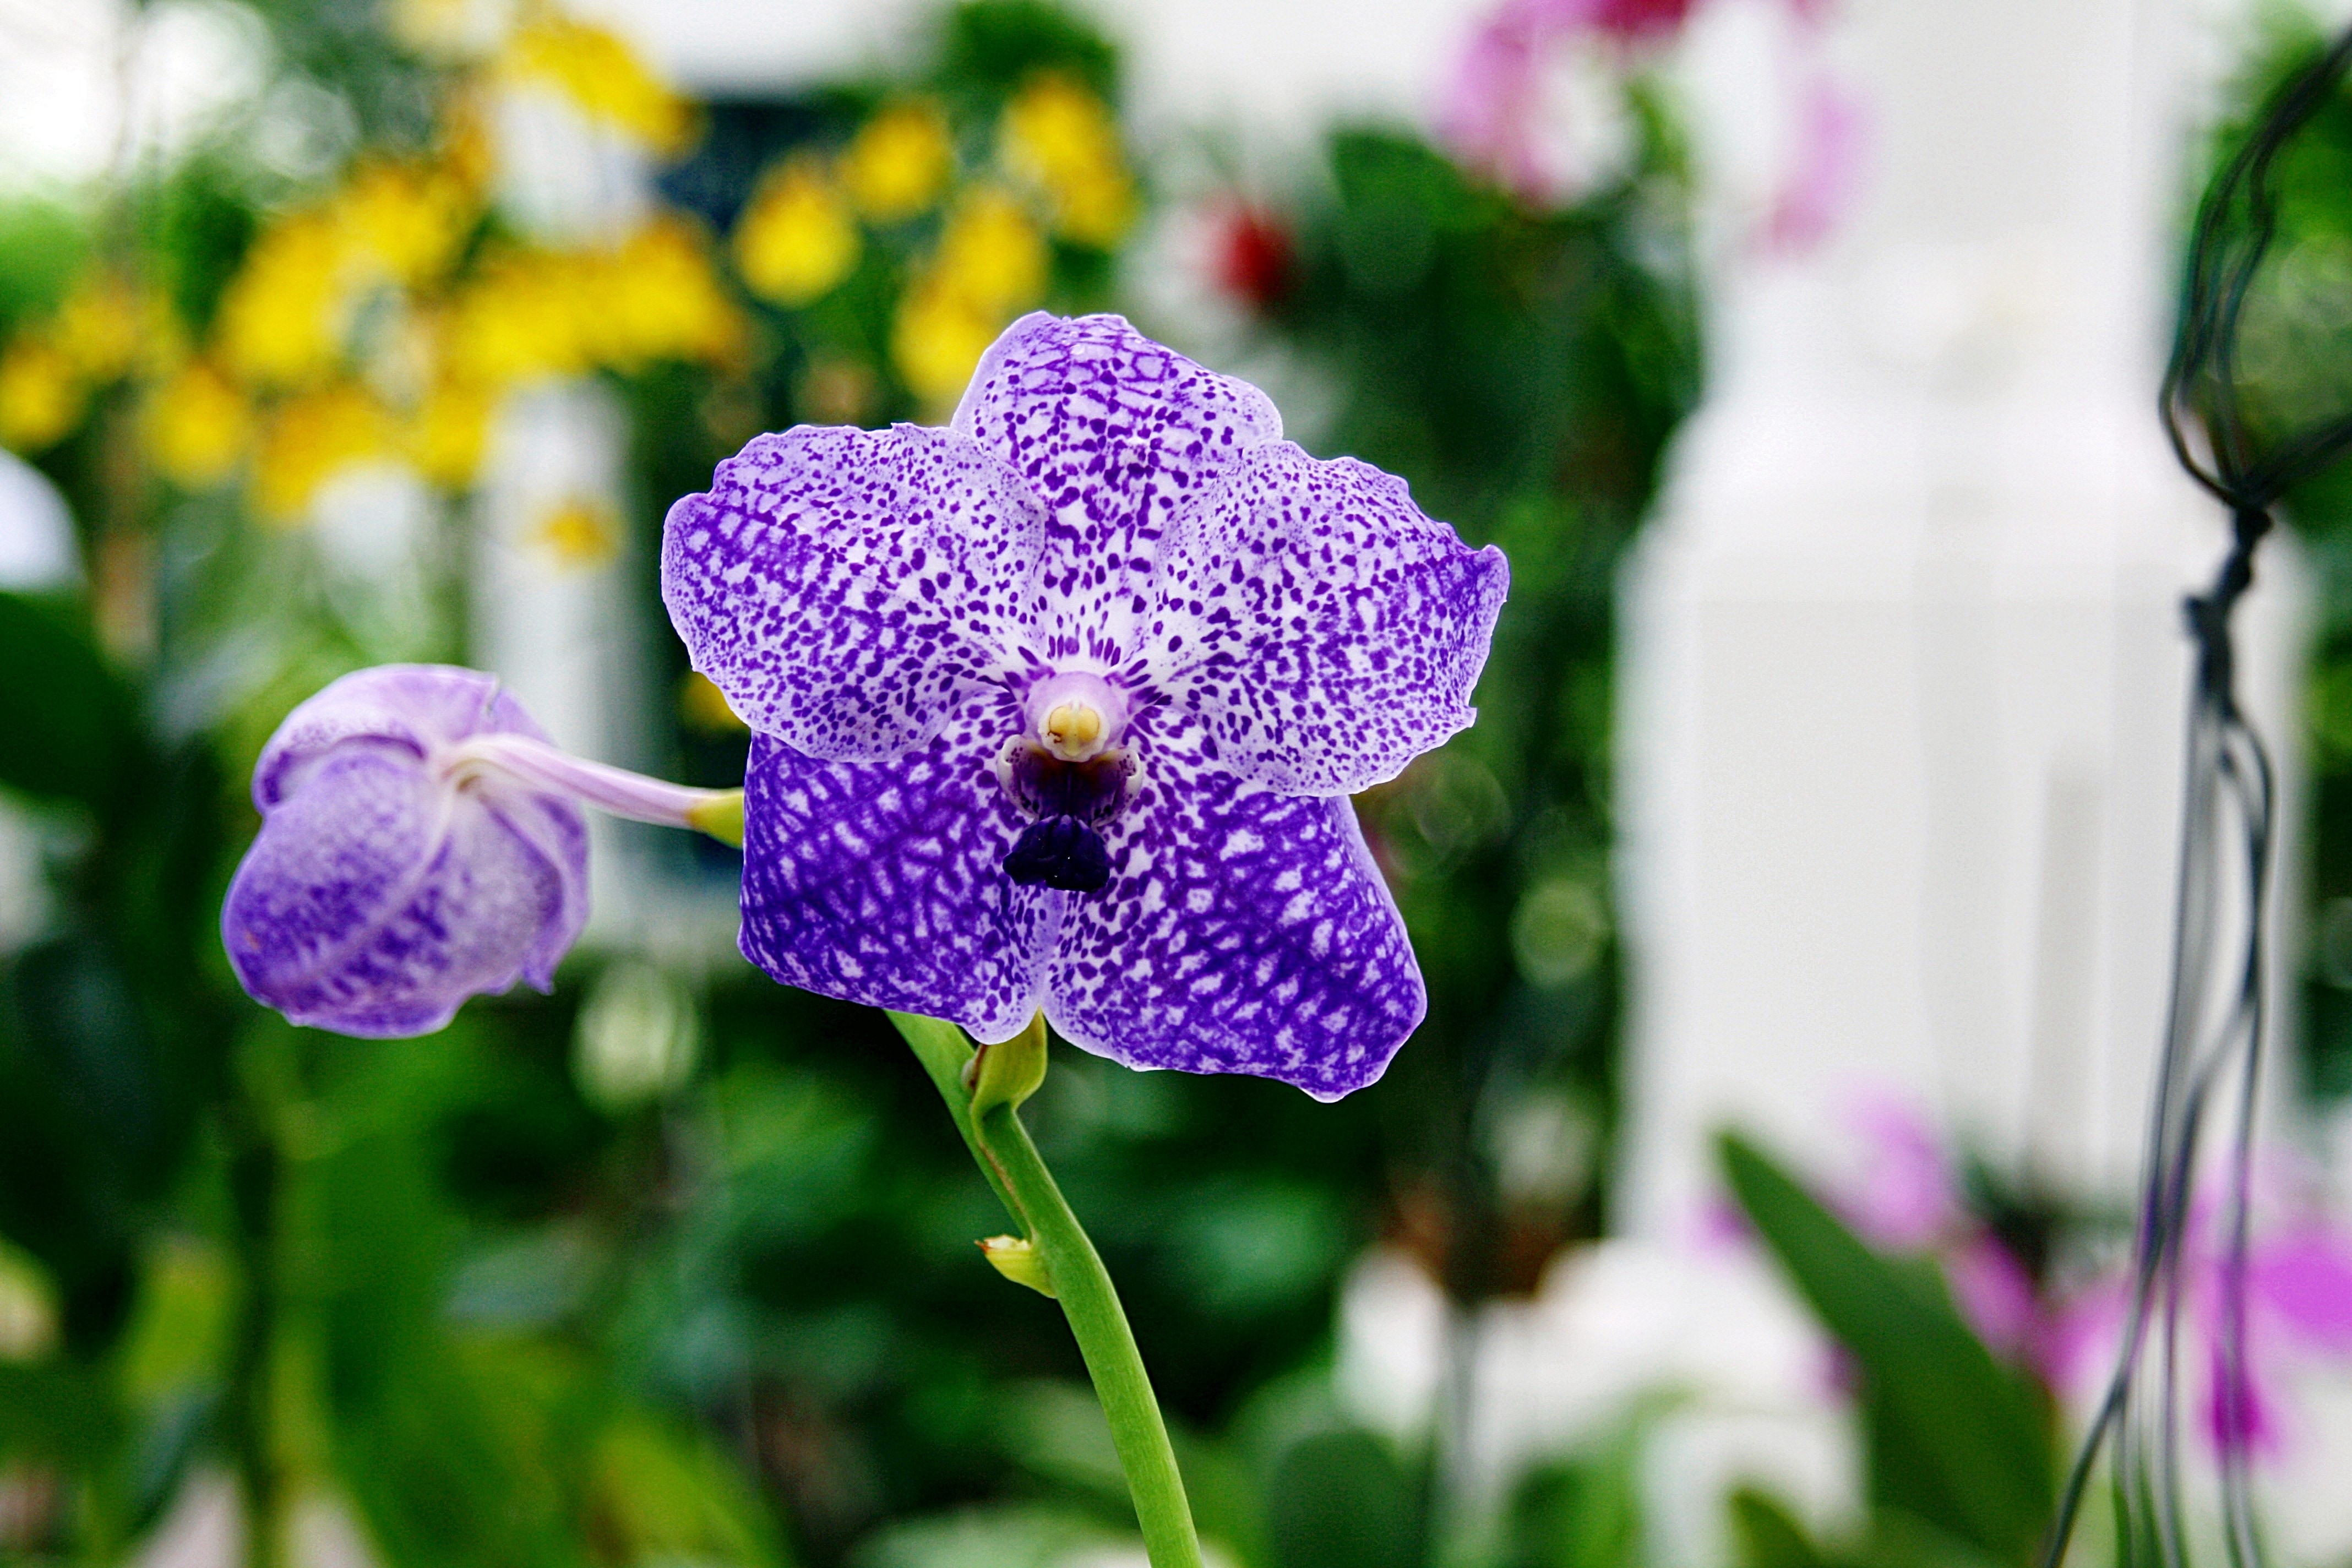 purple petal flower in shallow focus lens